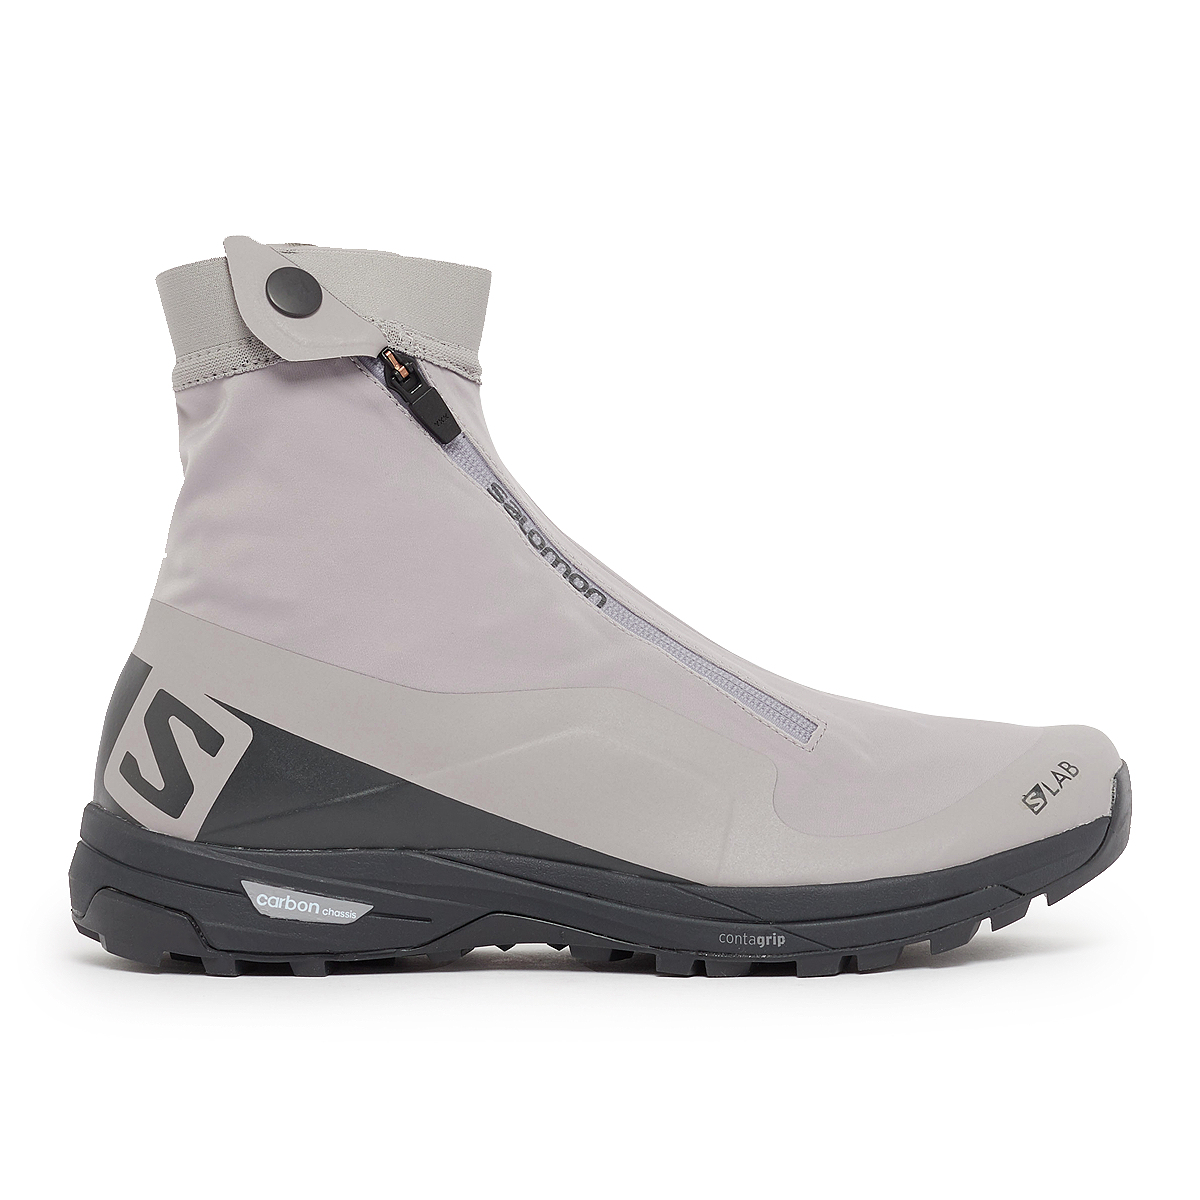 Salomon Men's XA Alpine 2 Advanced Sneakers in Gull/Phantom - L41750700